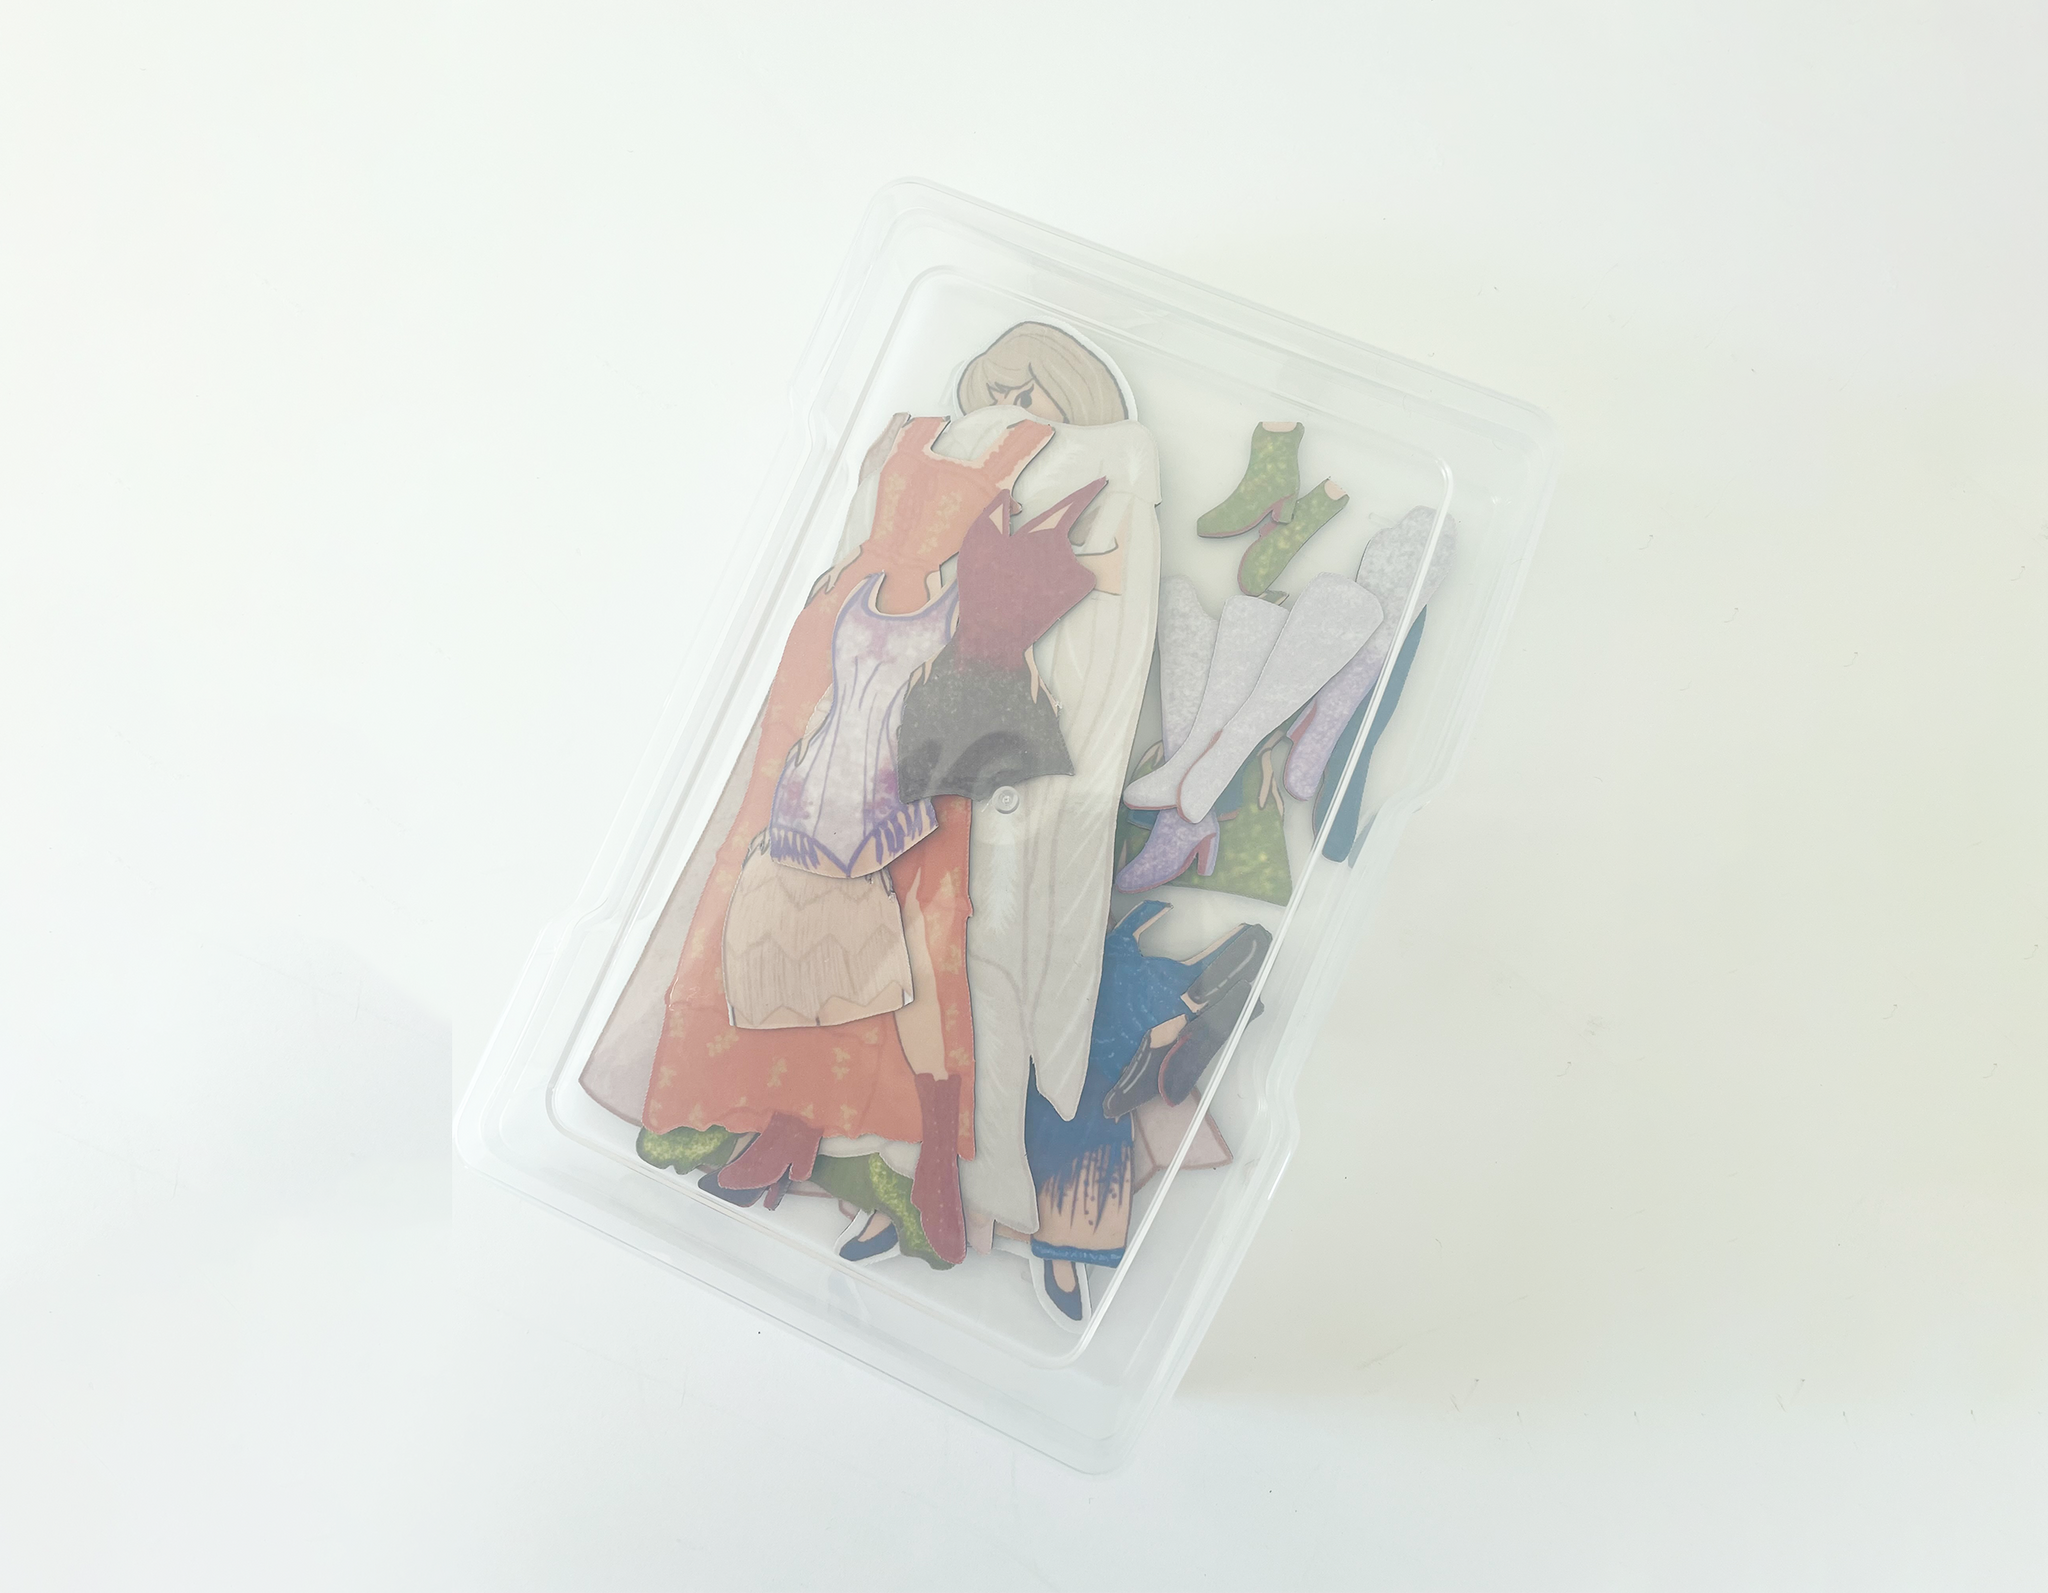 Taylor Swift Magnet Paper Doll Set One – Kaela Batson Designs